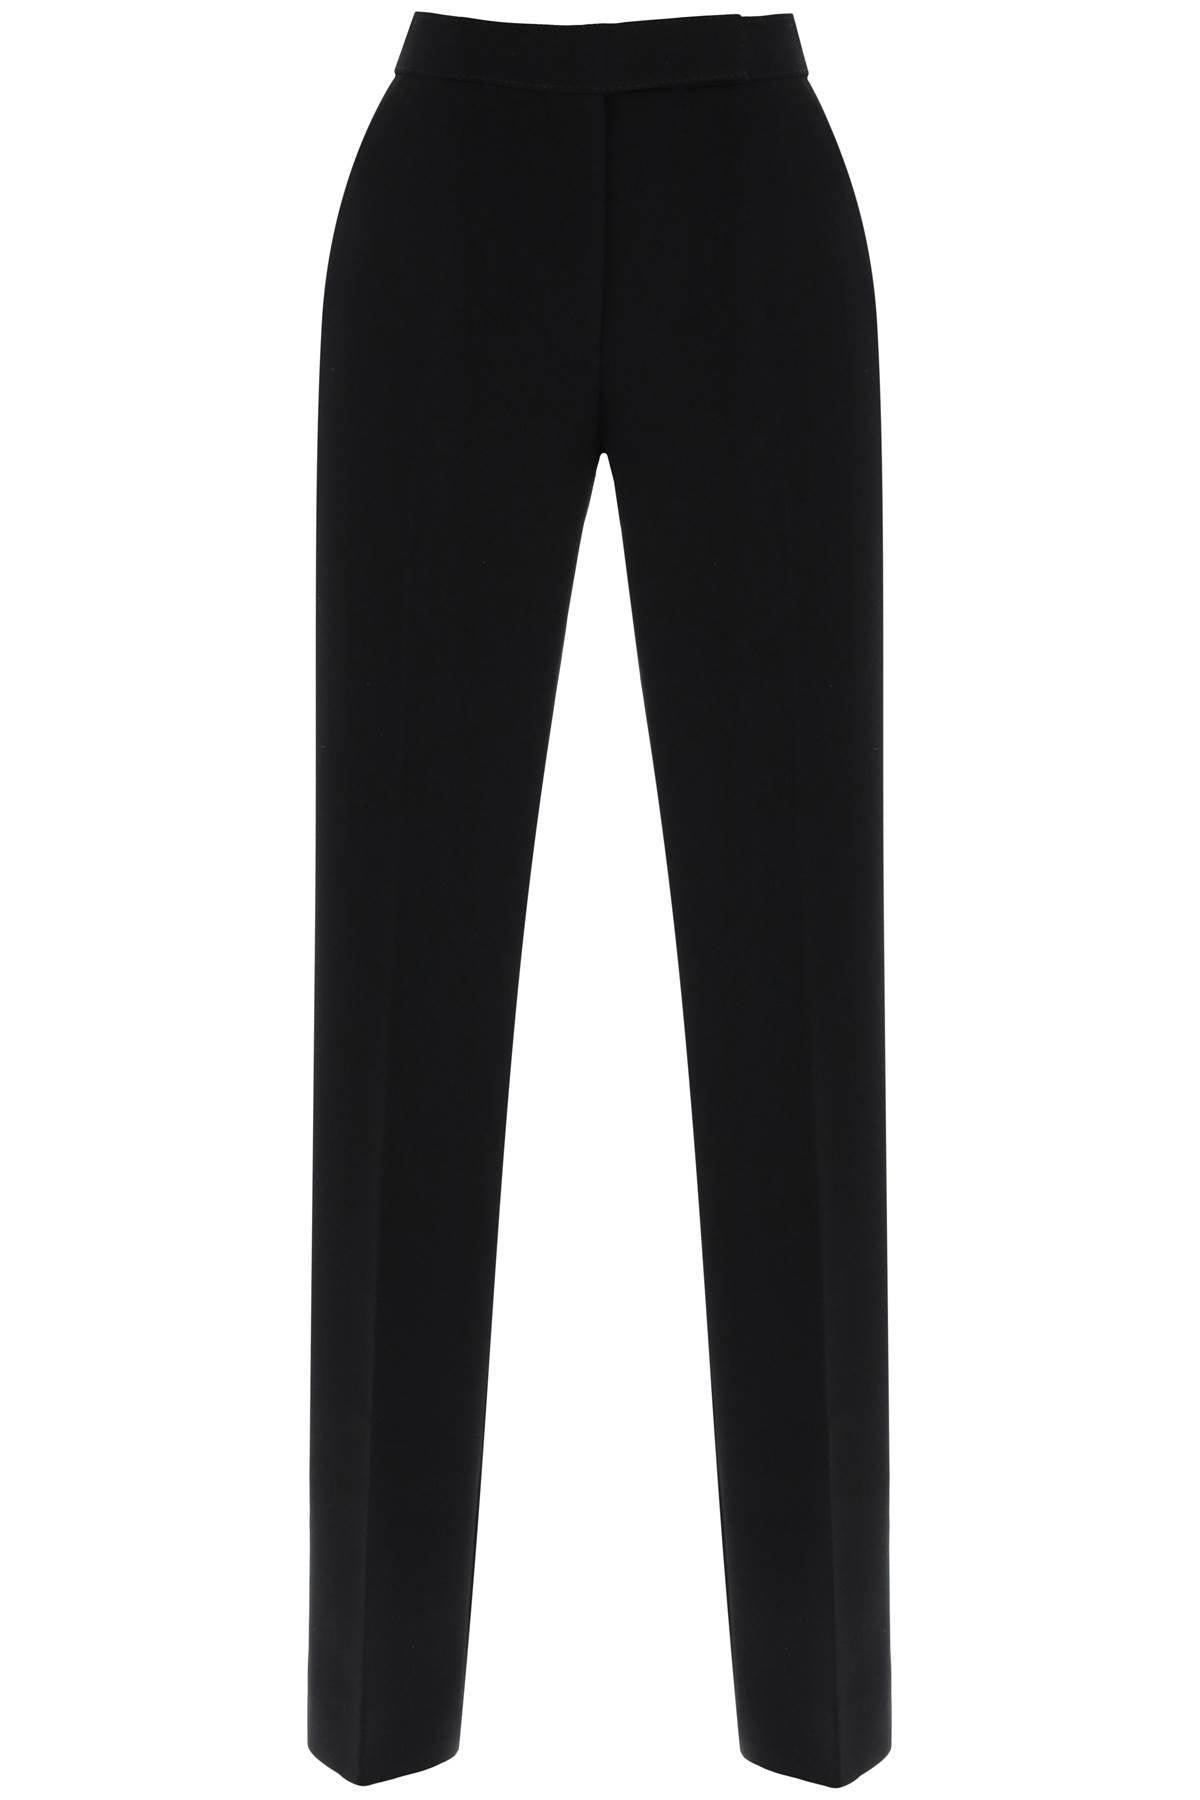 TORY BURCH Elegant Straight Leg Pants for Women in Black